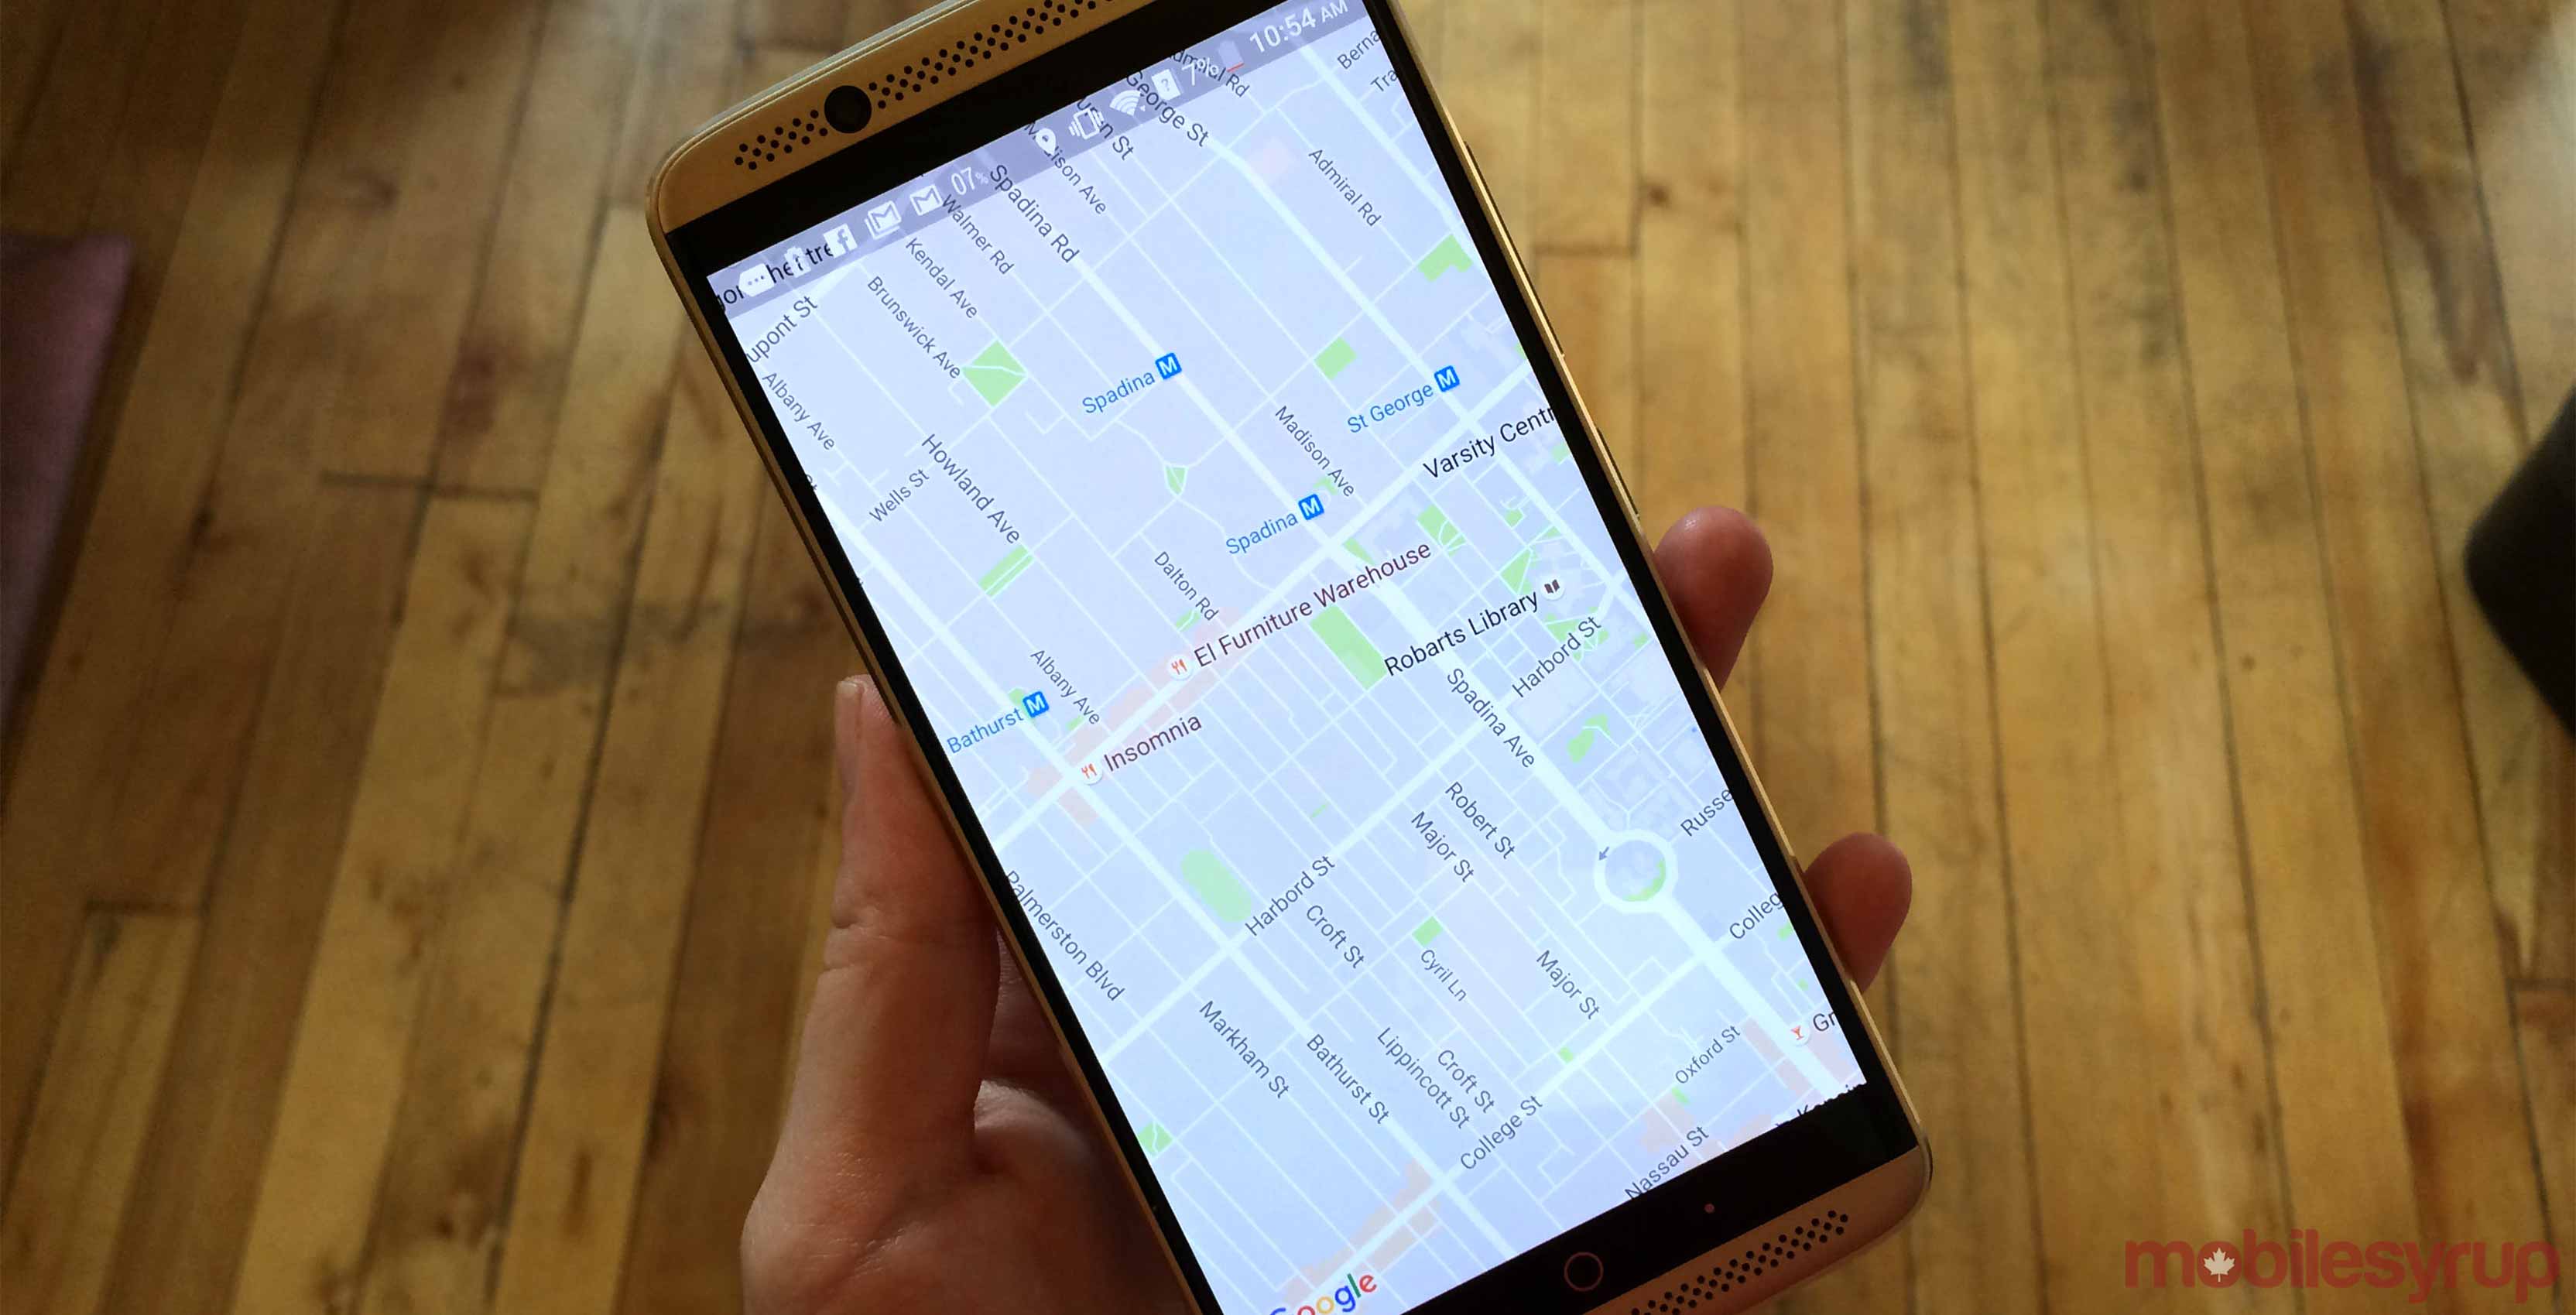 Google maps app display on phone